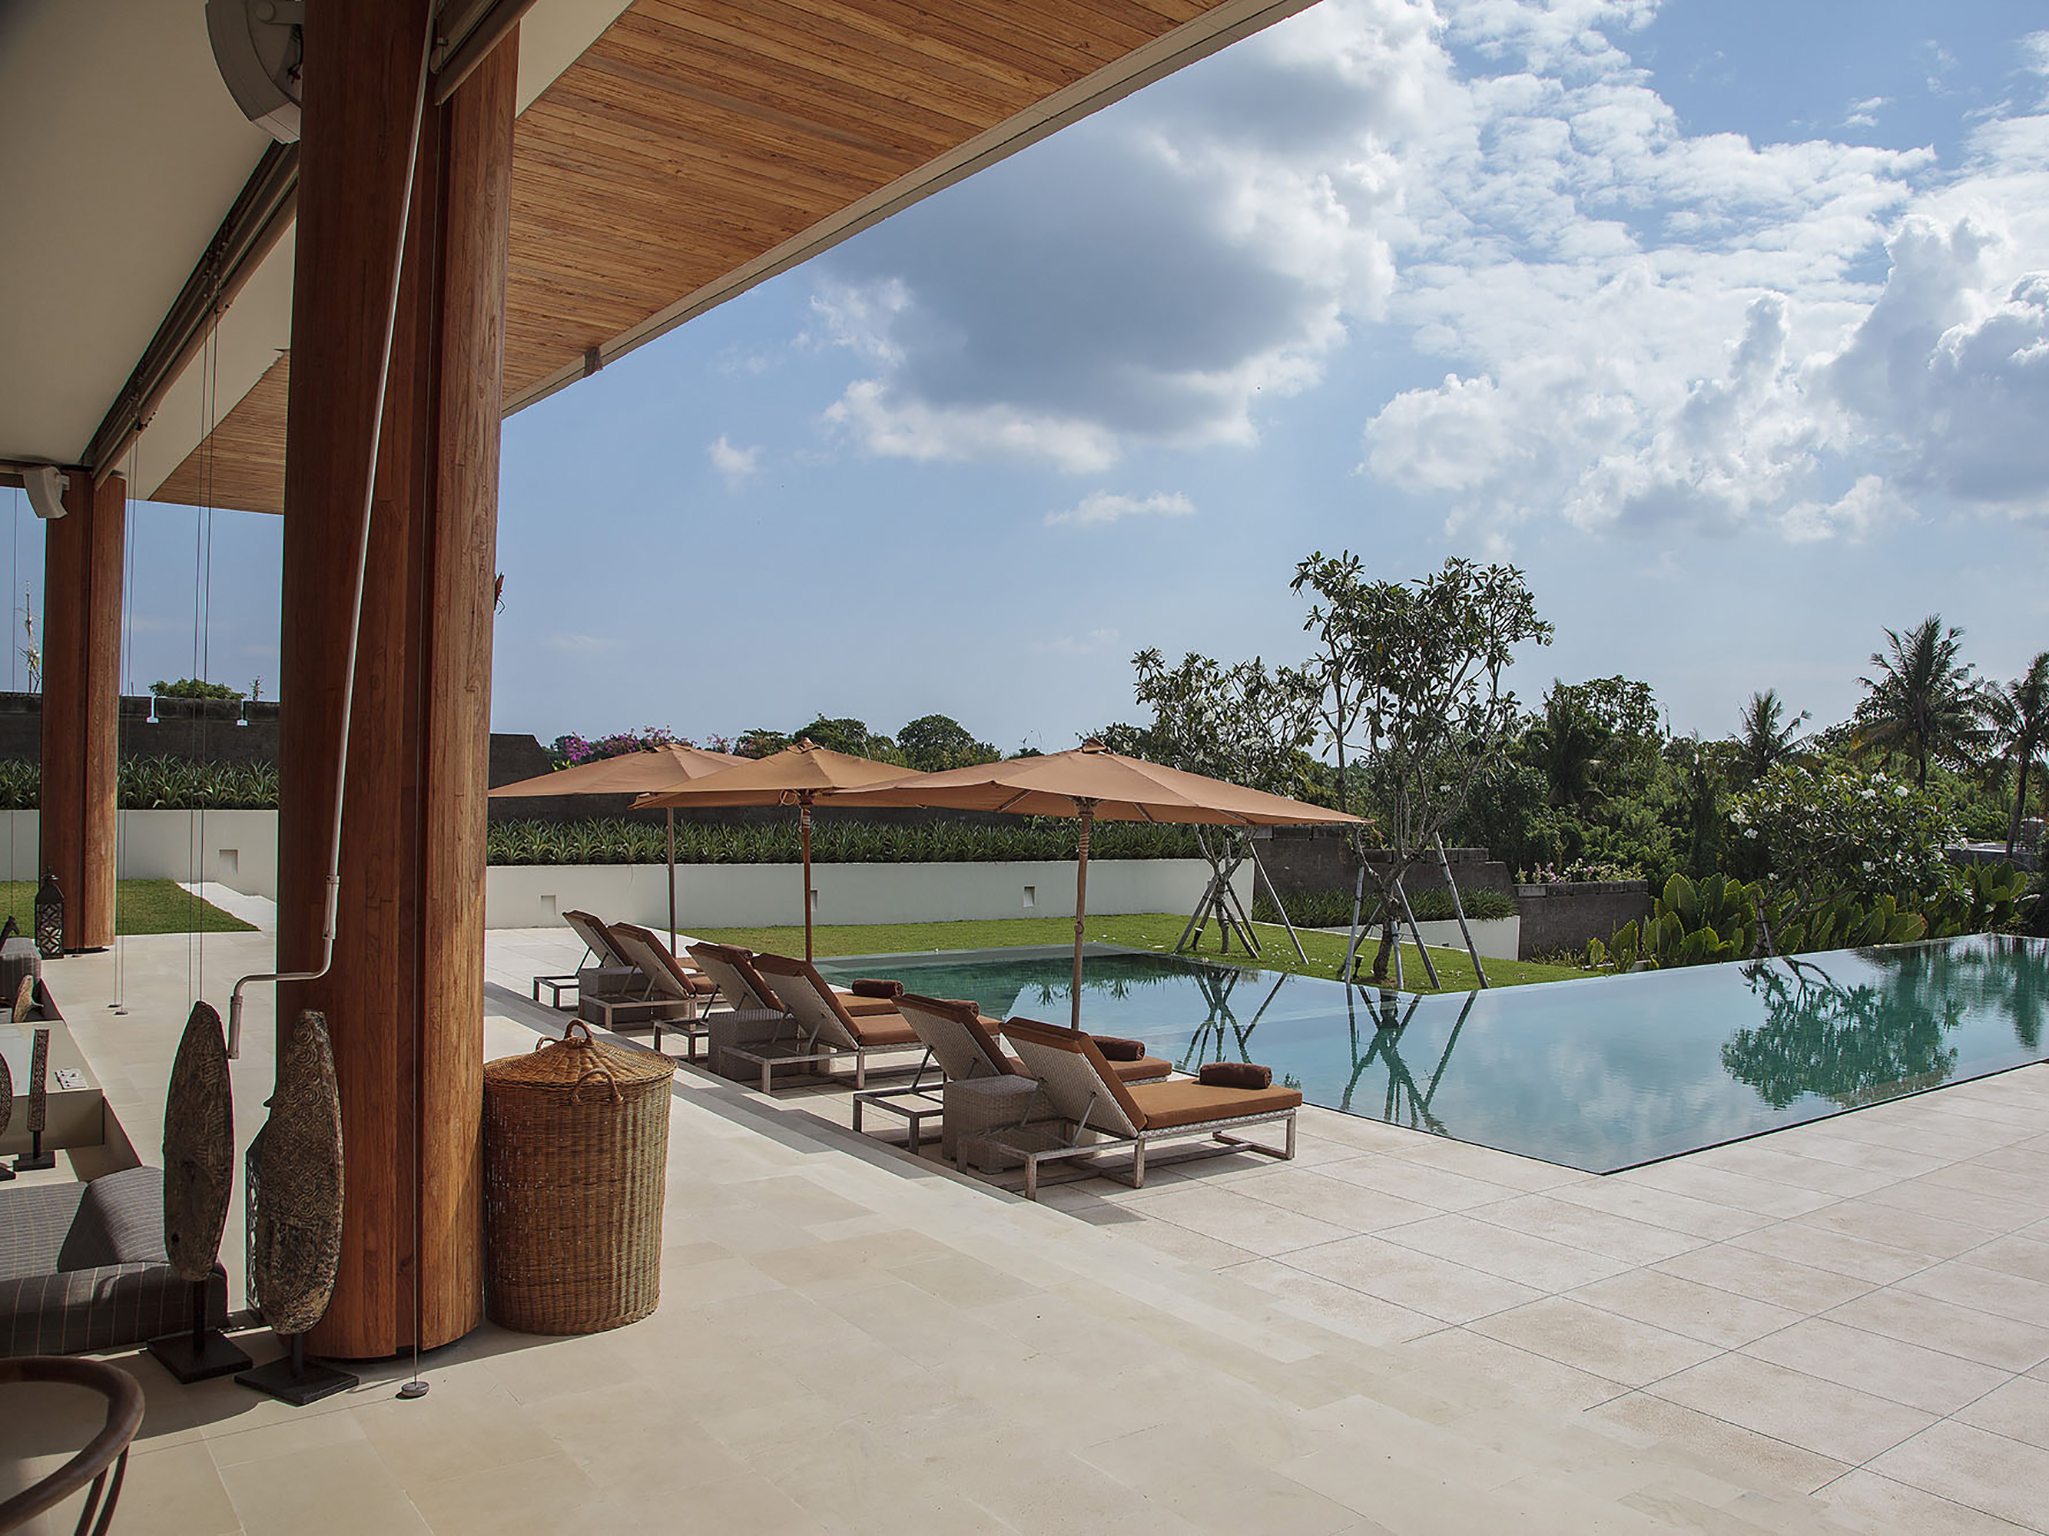 The Iman Villa - Infinity pool awaits - The Iman Villa, Canggu, Bali